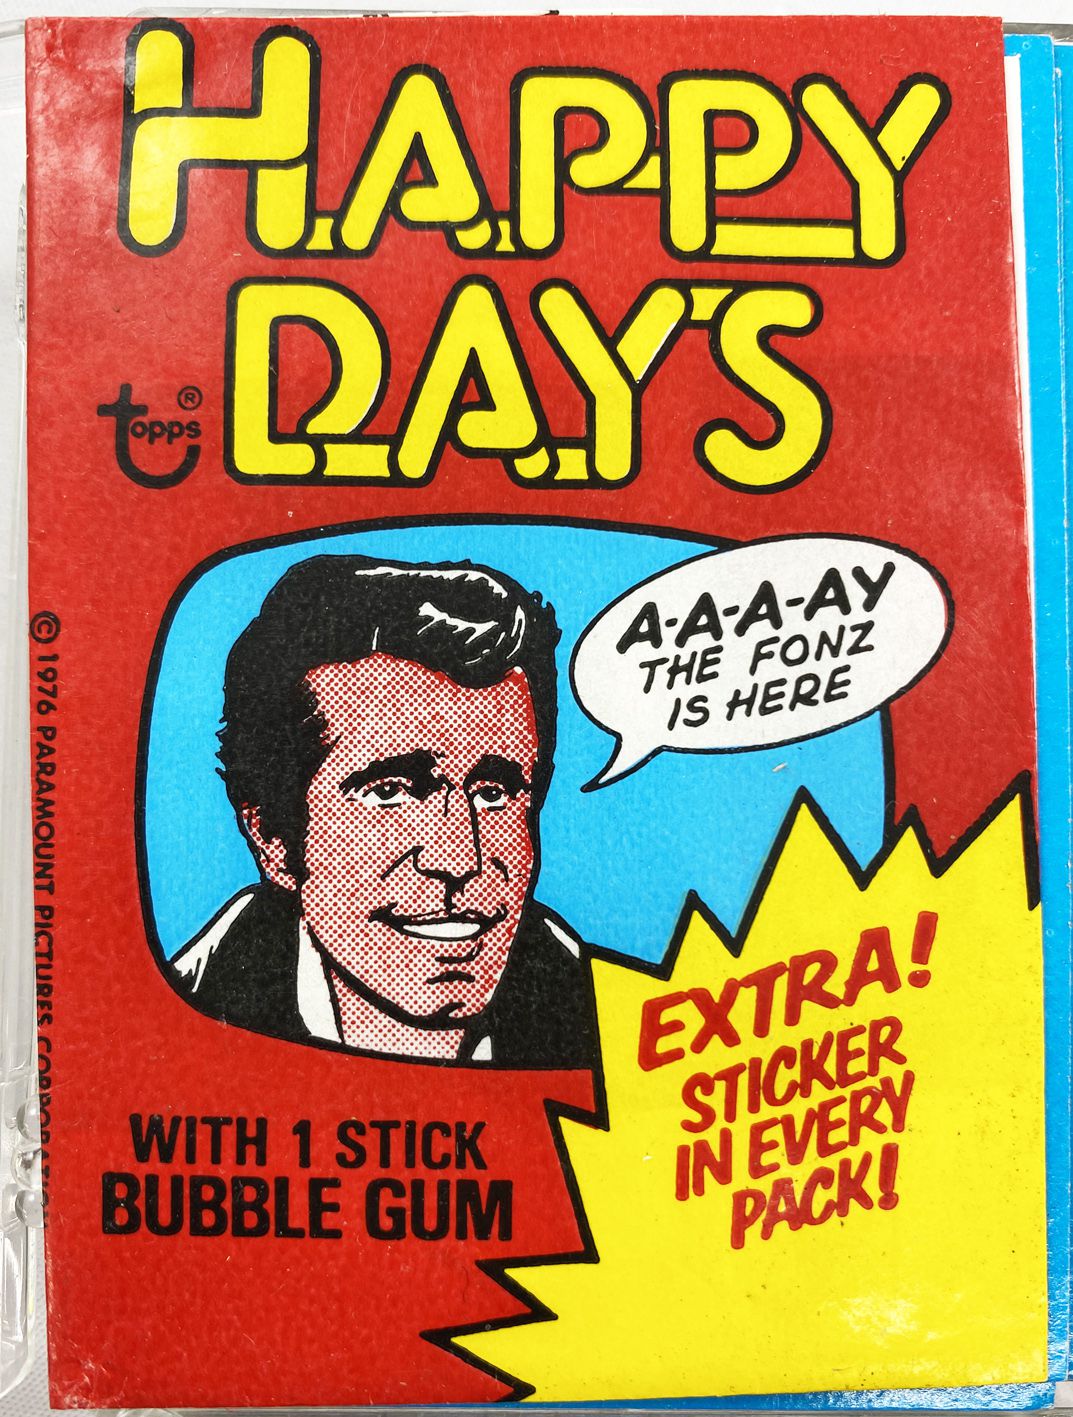 Happy Days cards.jpg